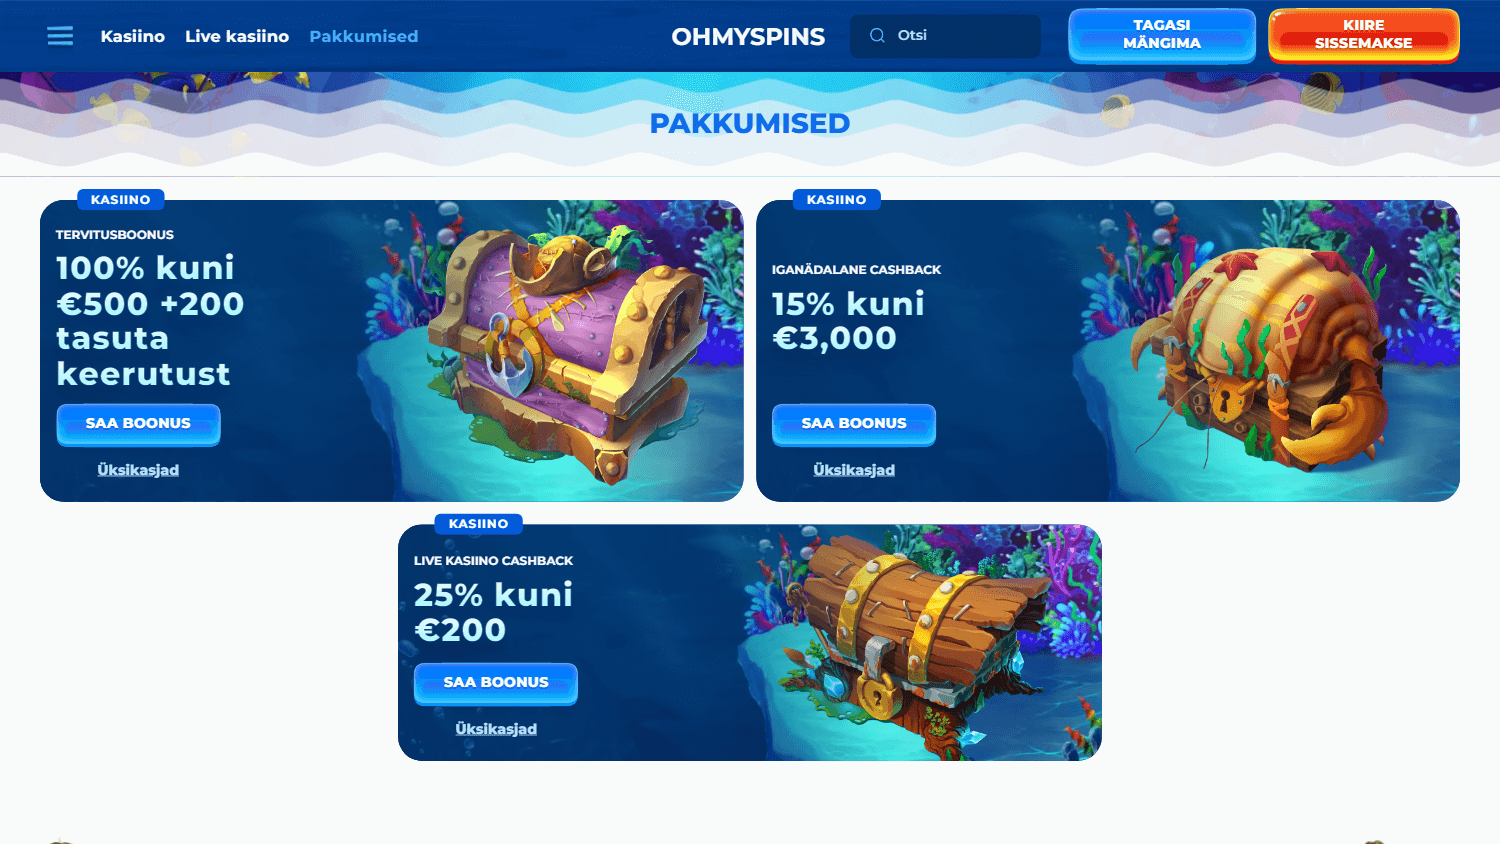 ohmyspins_casino_ee_promotions_desktop